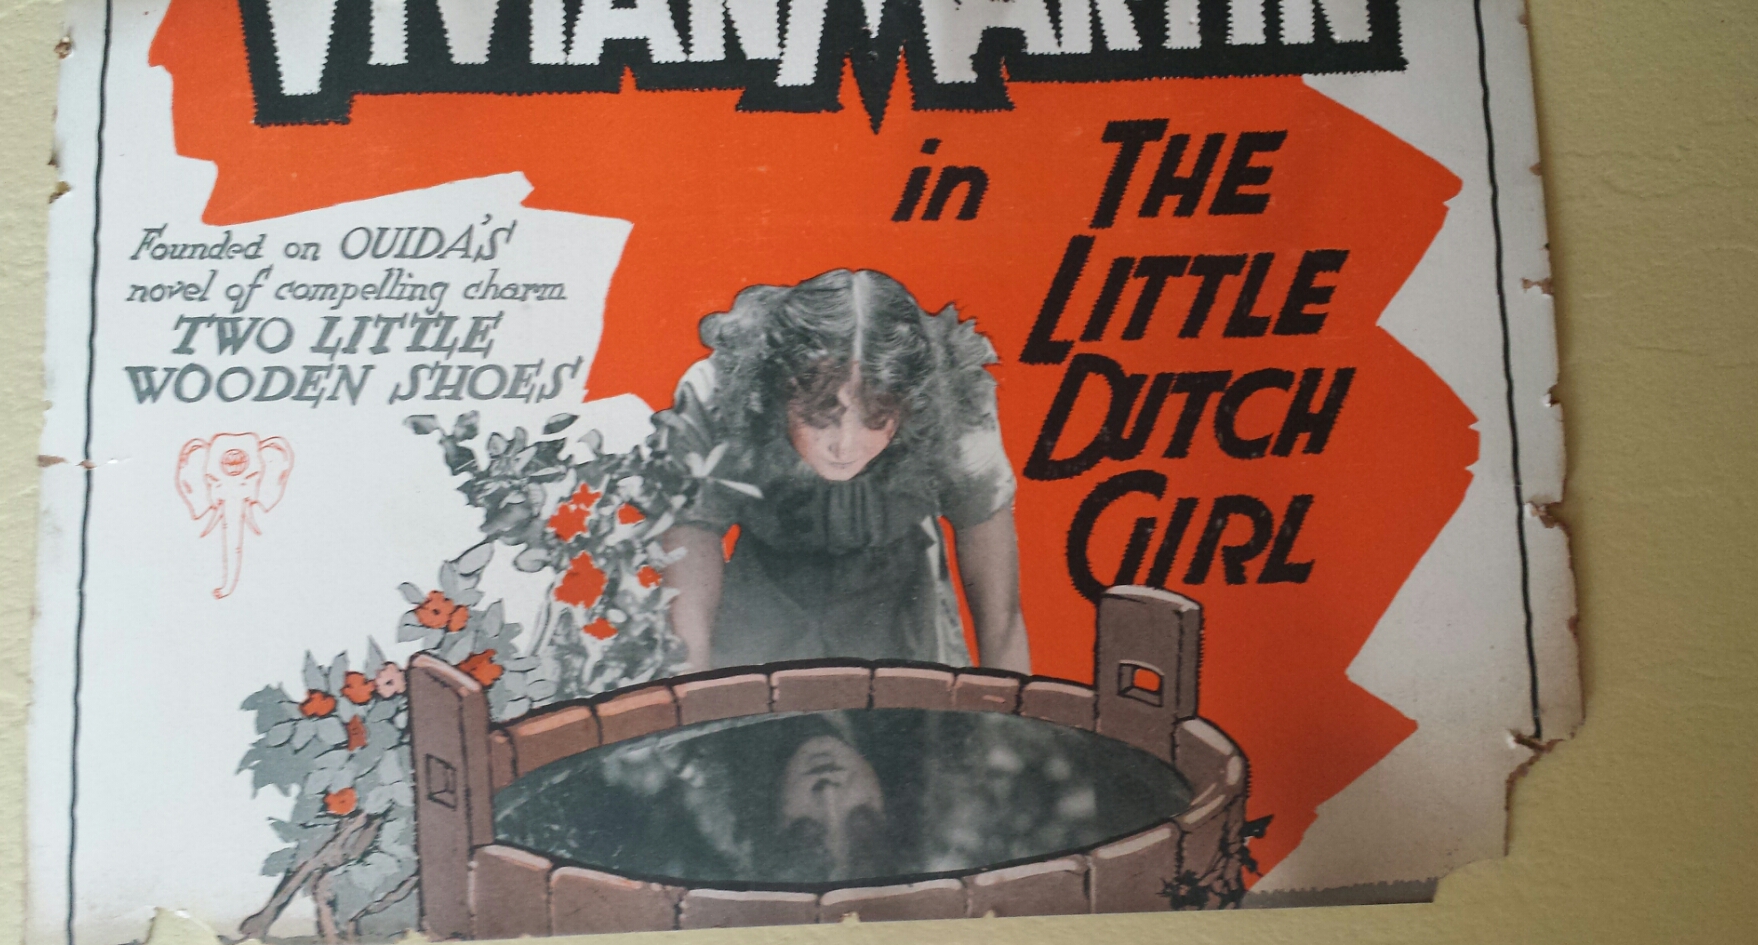 The Little Dutch Girl